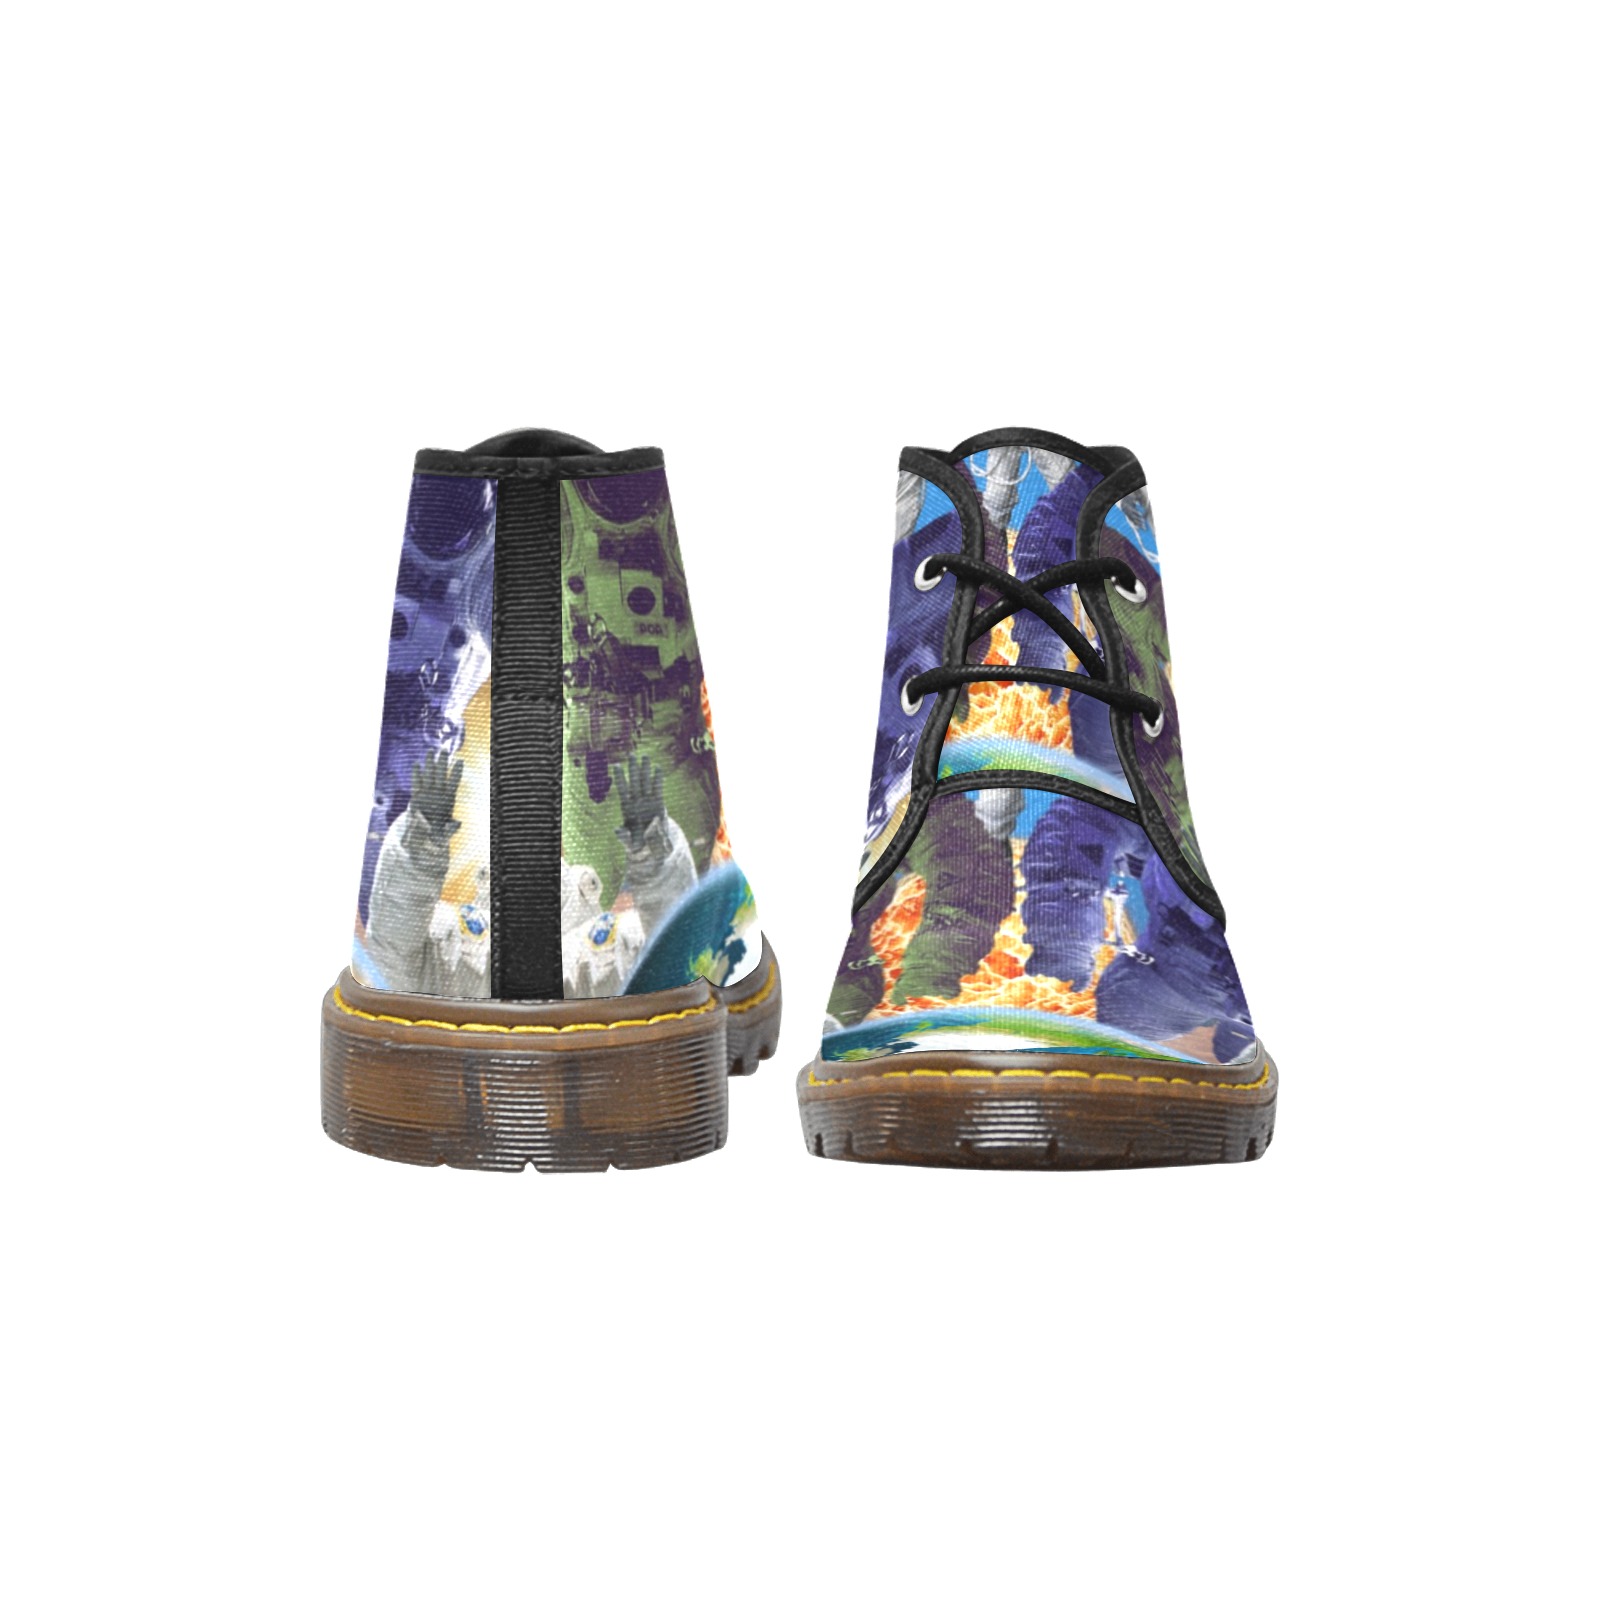 CLOUD ASTRONAUT Women's Canvas Chukka Boots (Model 2402-1)